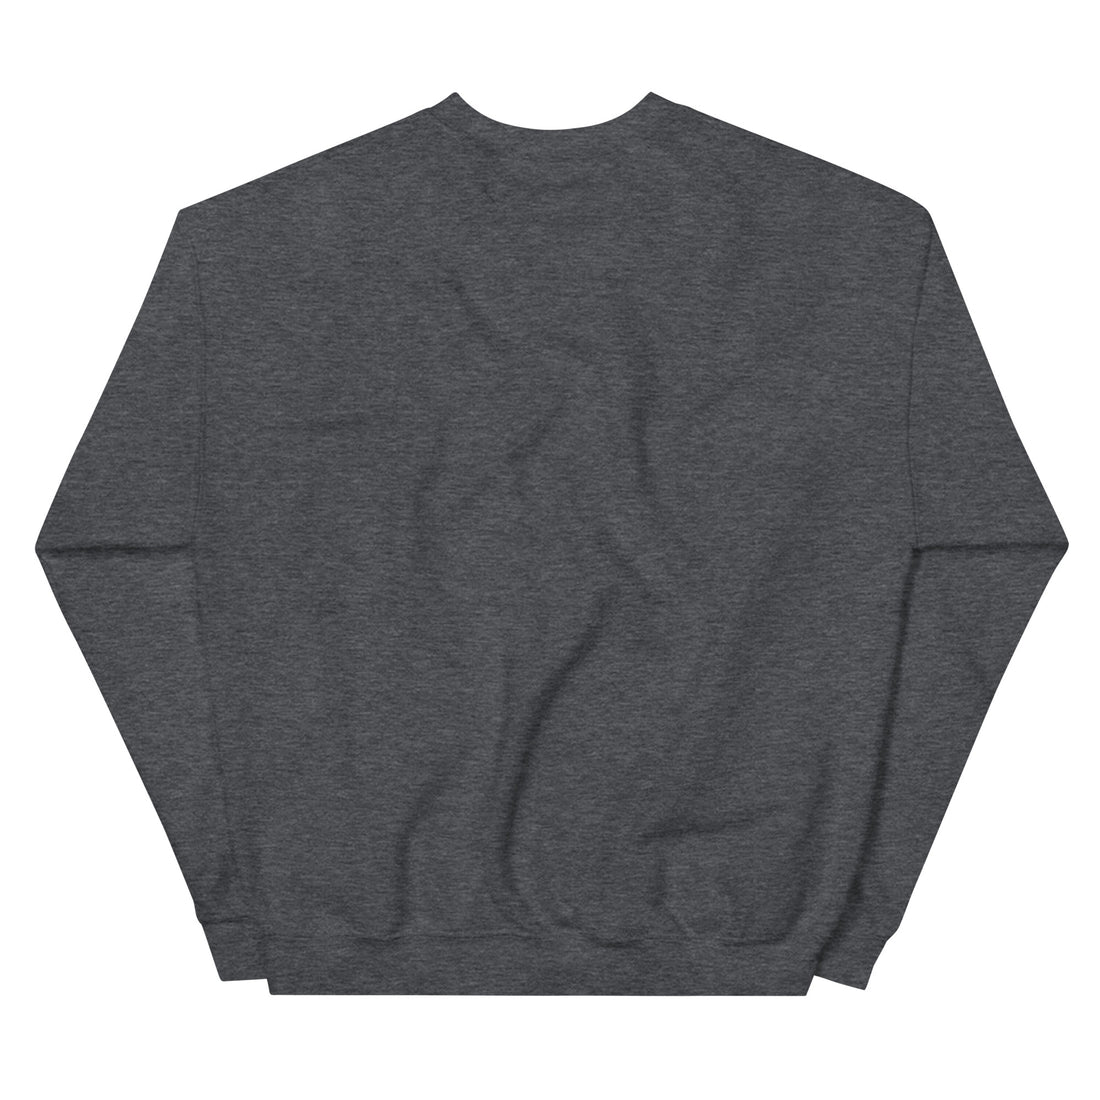 Riiink Original Six – Sweatshirt